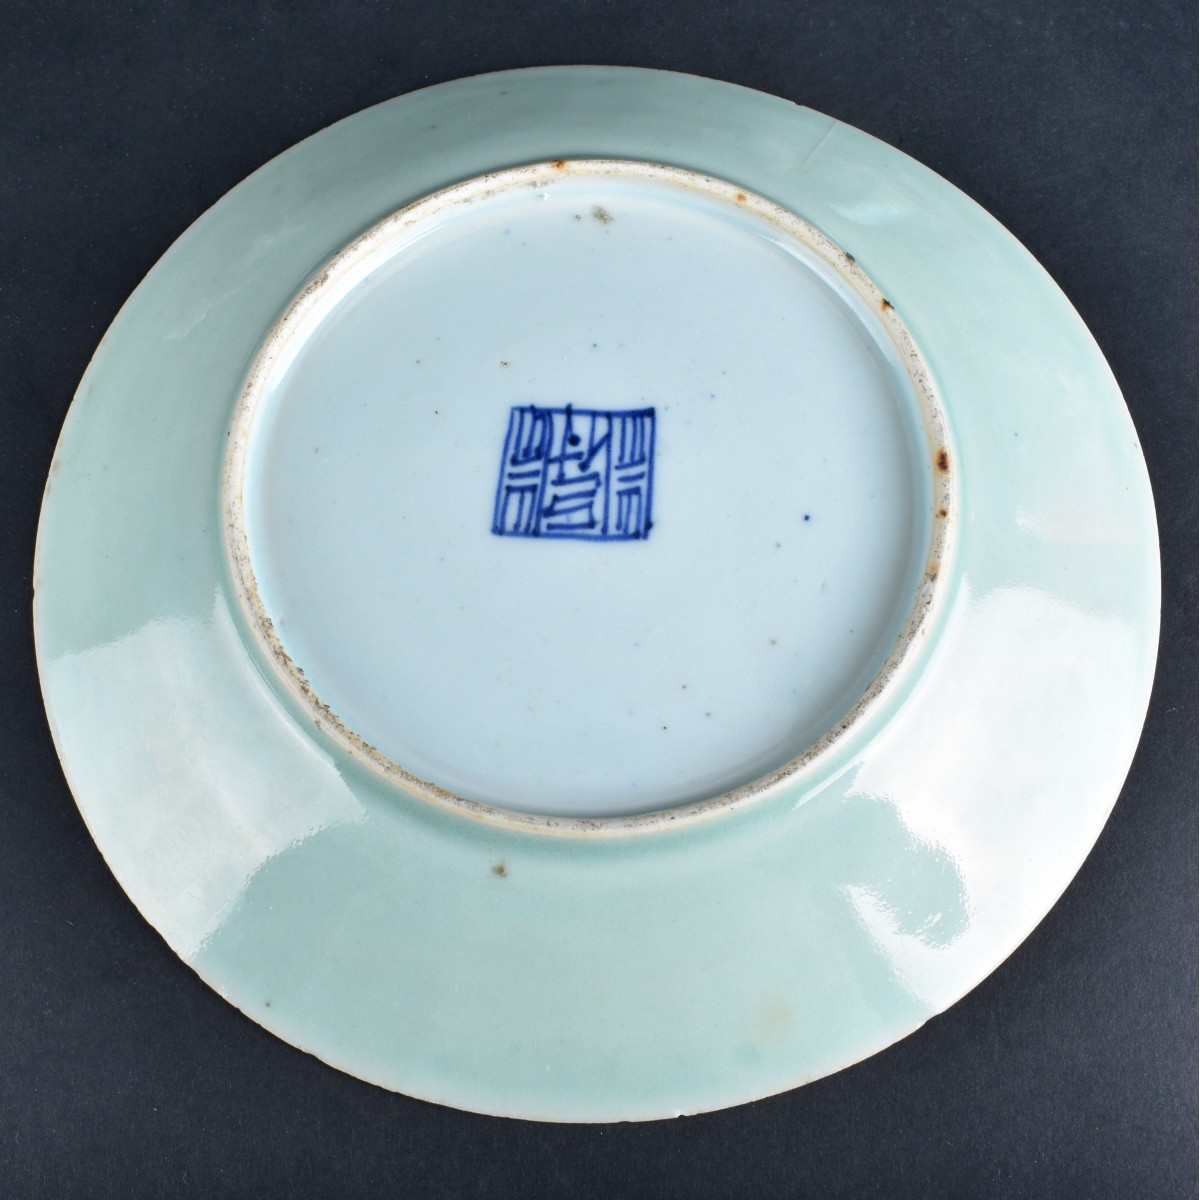 Chinese Plates